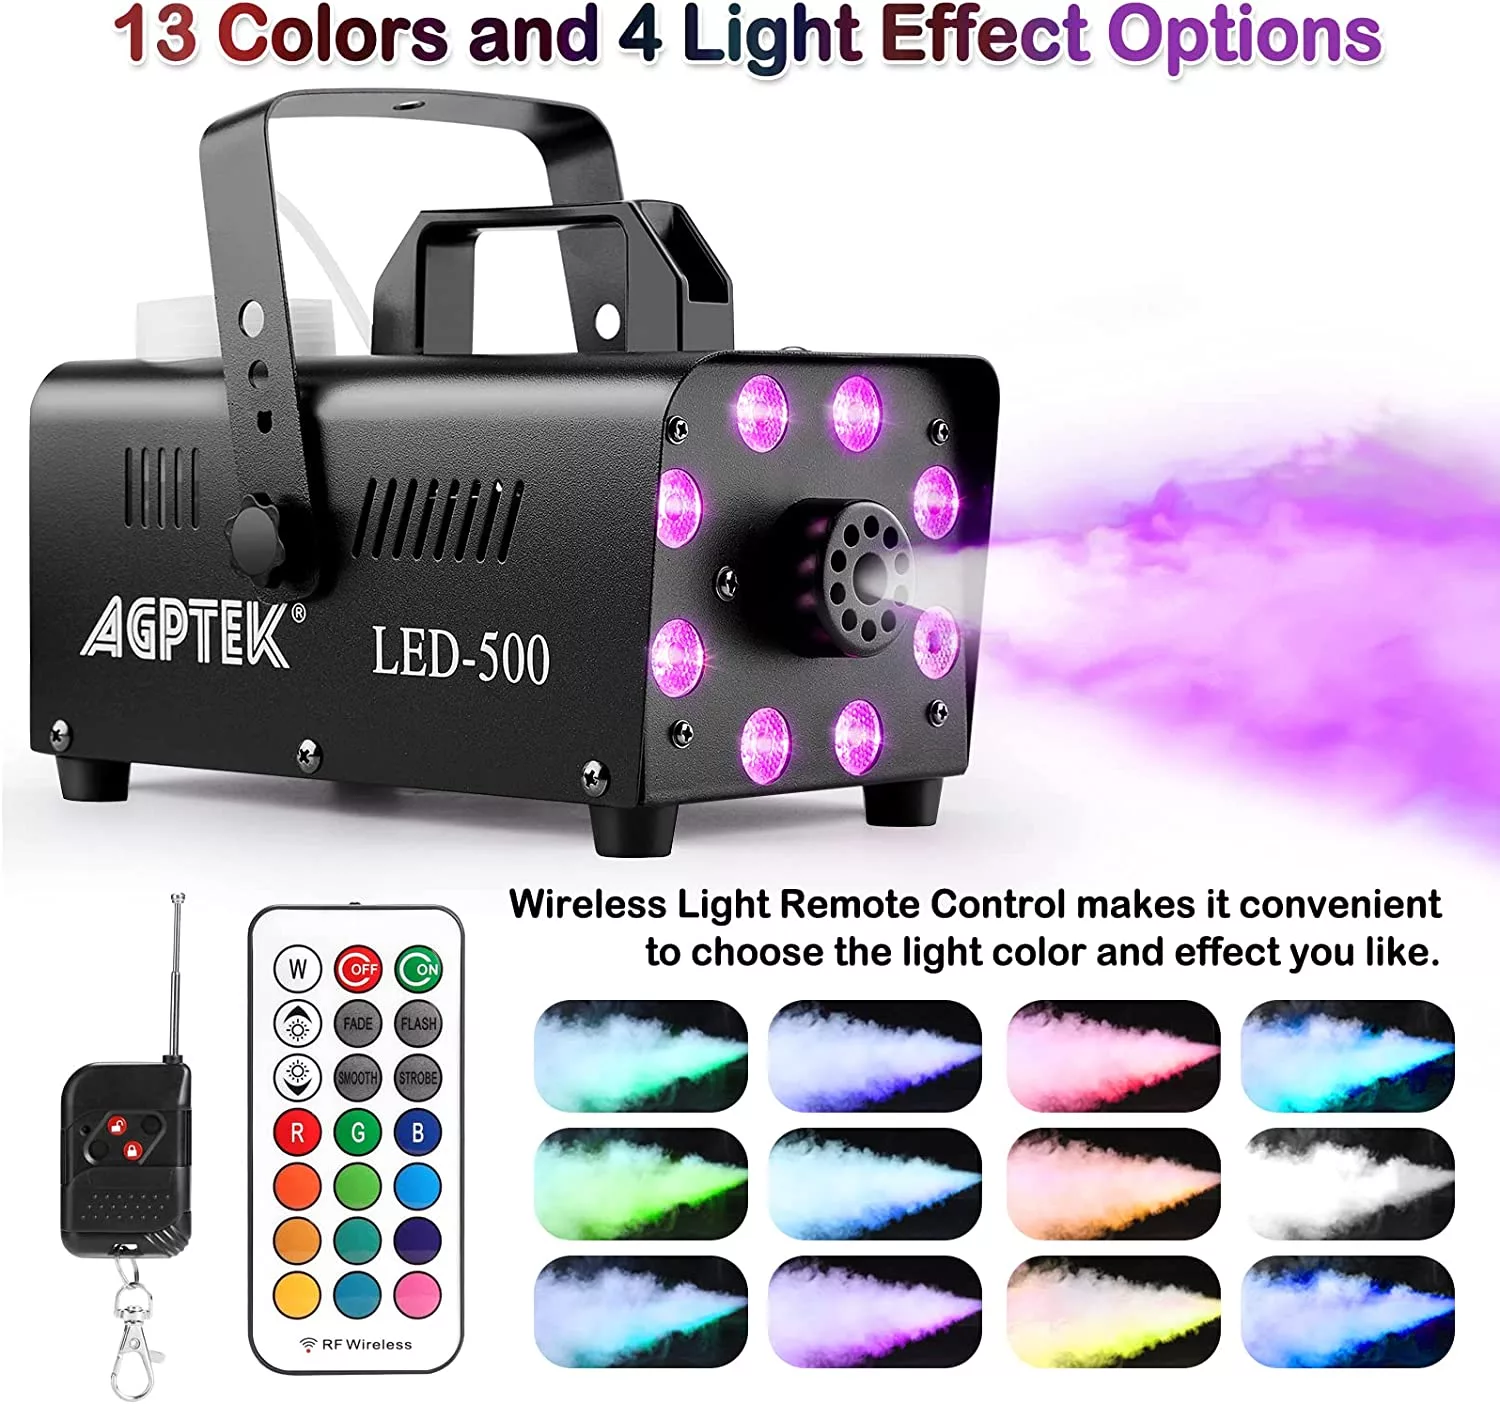 AGPTEK Fog Machine has 13 colors and 4 light effect options